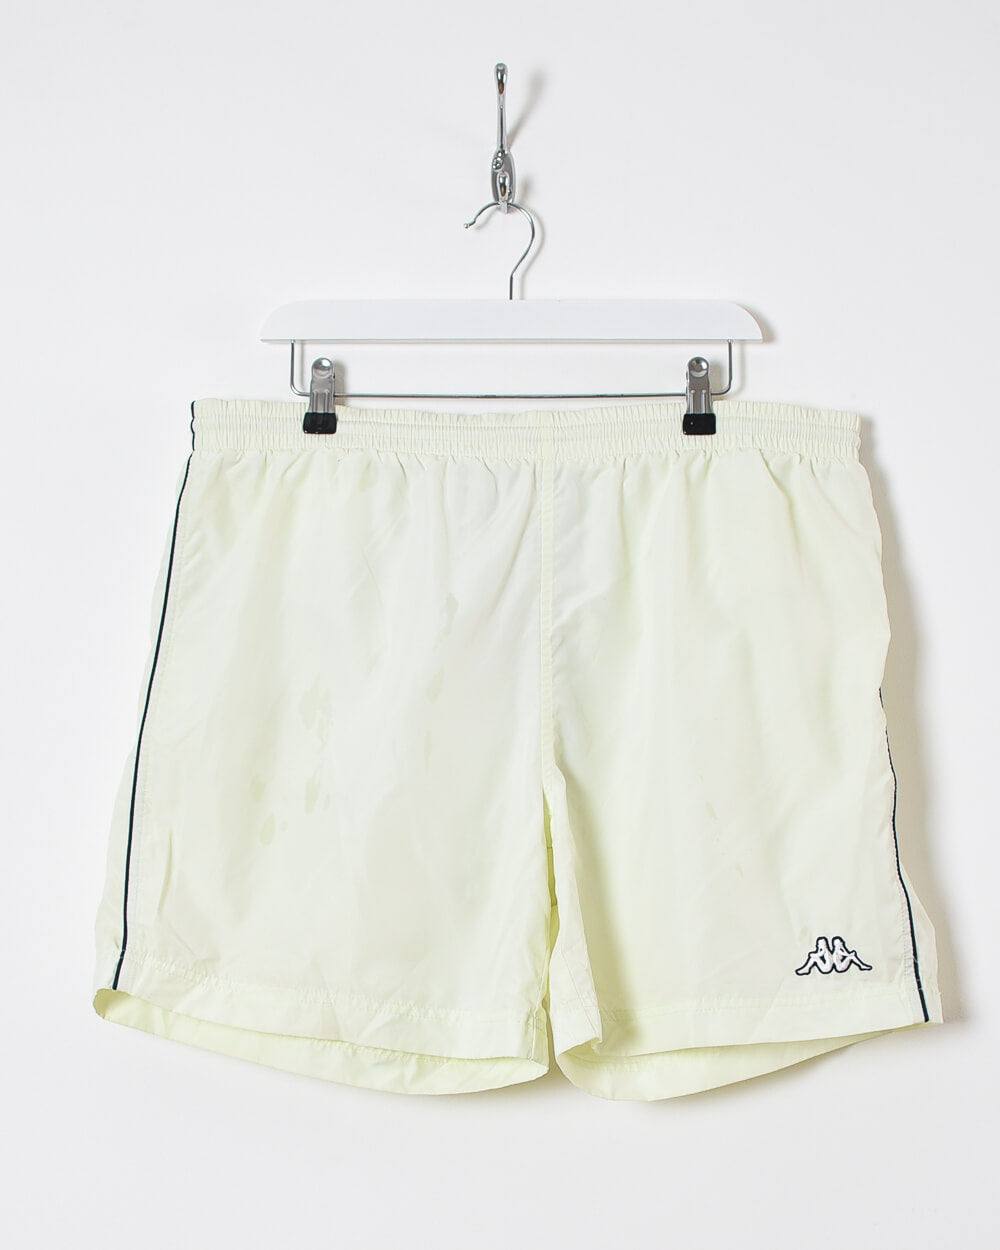 Kappa Swimwear Shorts - W36 - Domno Vintage 90s, 80s, 00s Retro and Vintage Clothing 